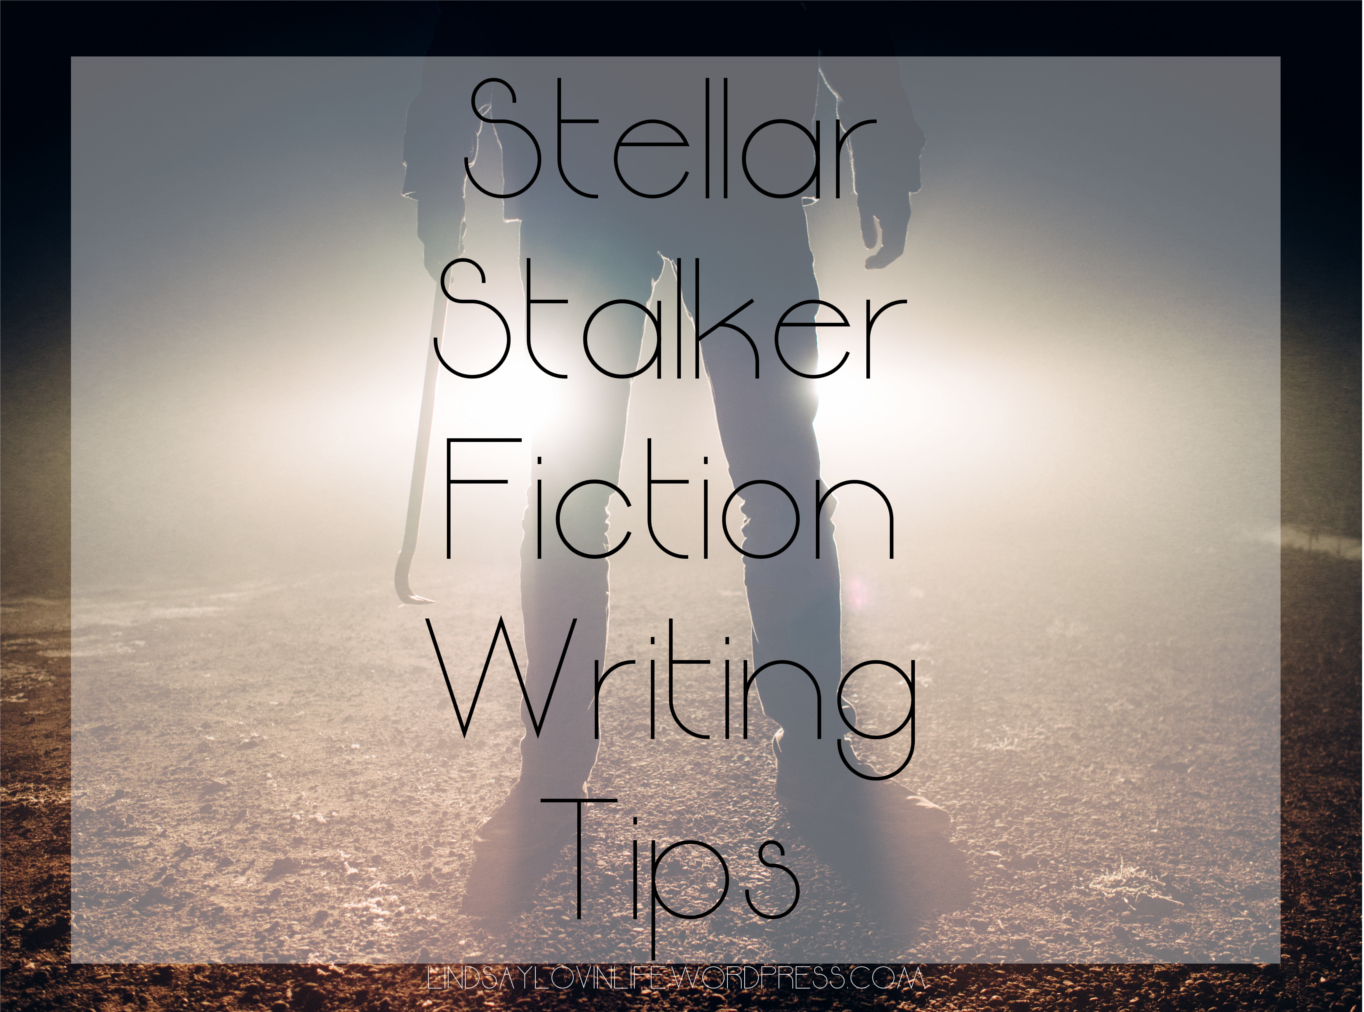 Stellar Stalker Fiction Writing Tips